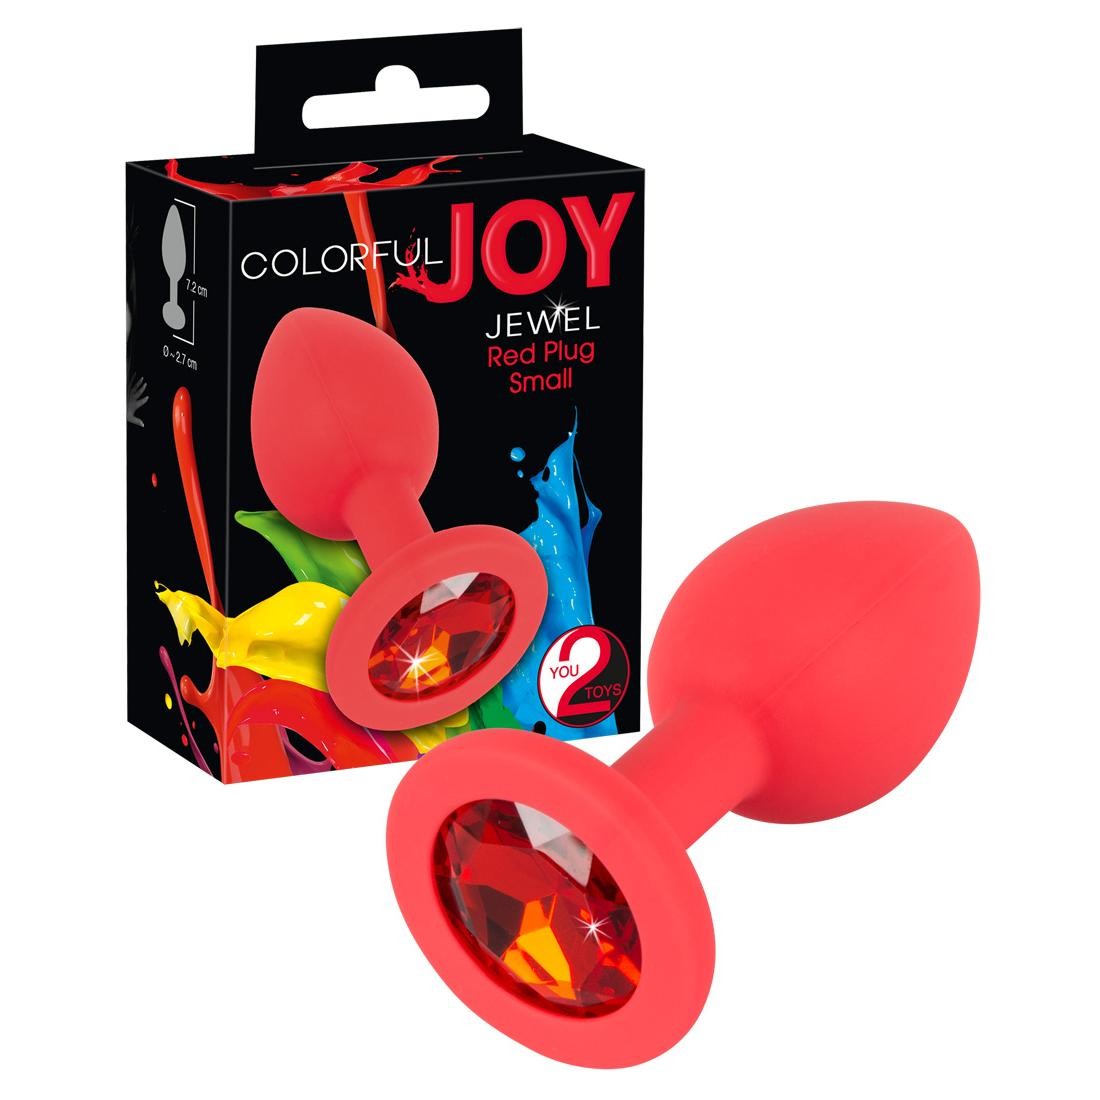  You2Toys  -  Colorful  Joy  Jewel  Red  Plug  sm  -  Analplug 